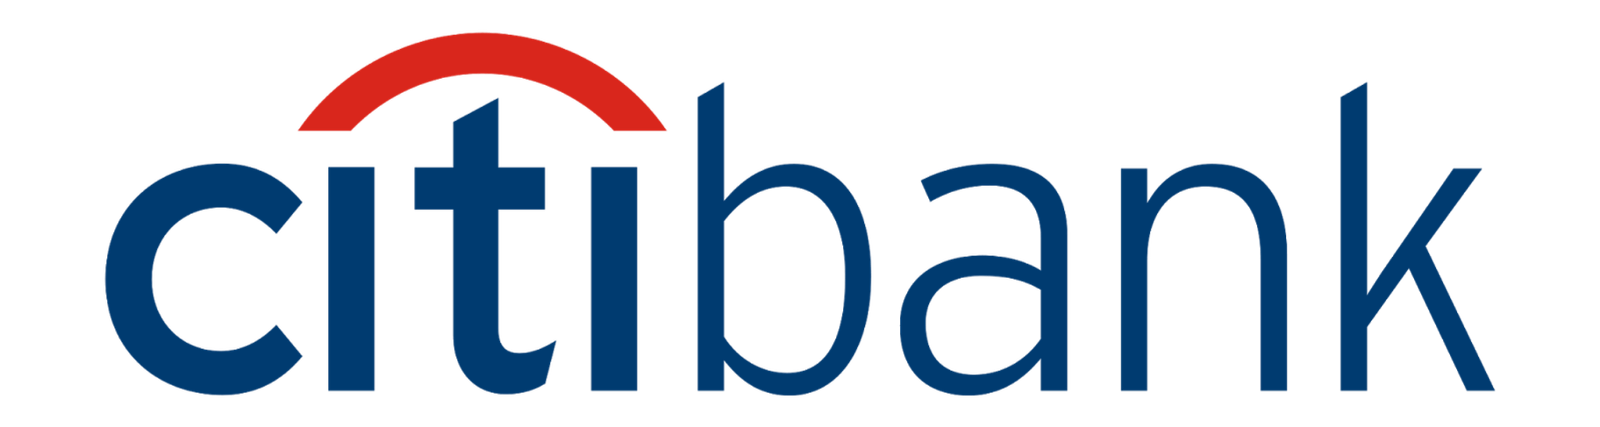 Citibank-logo-min